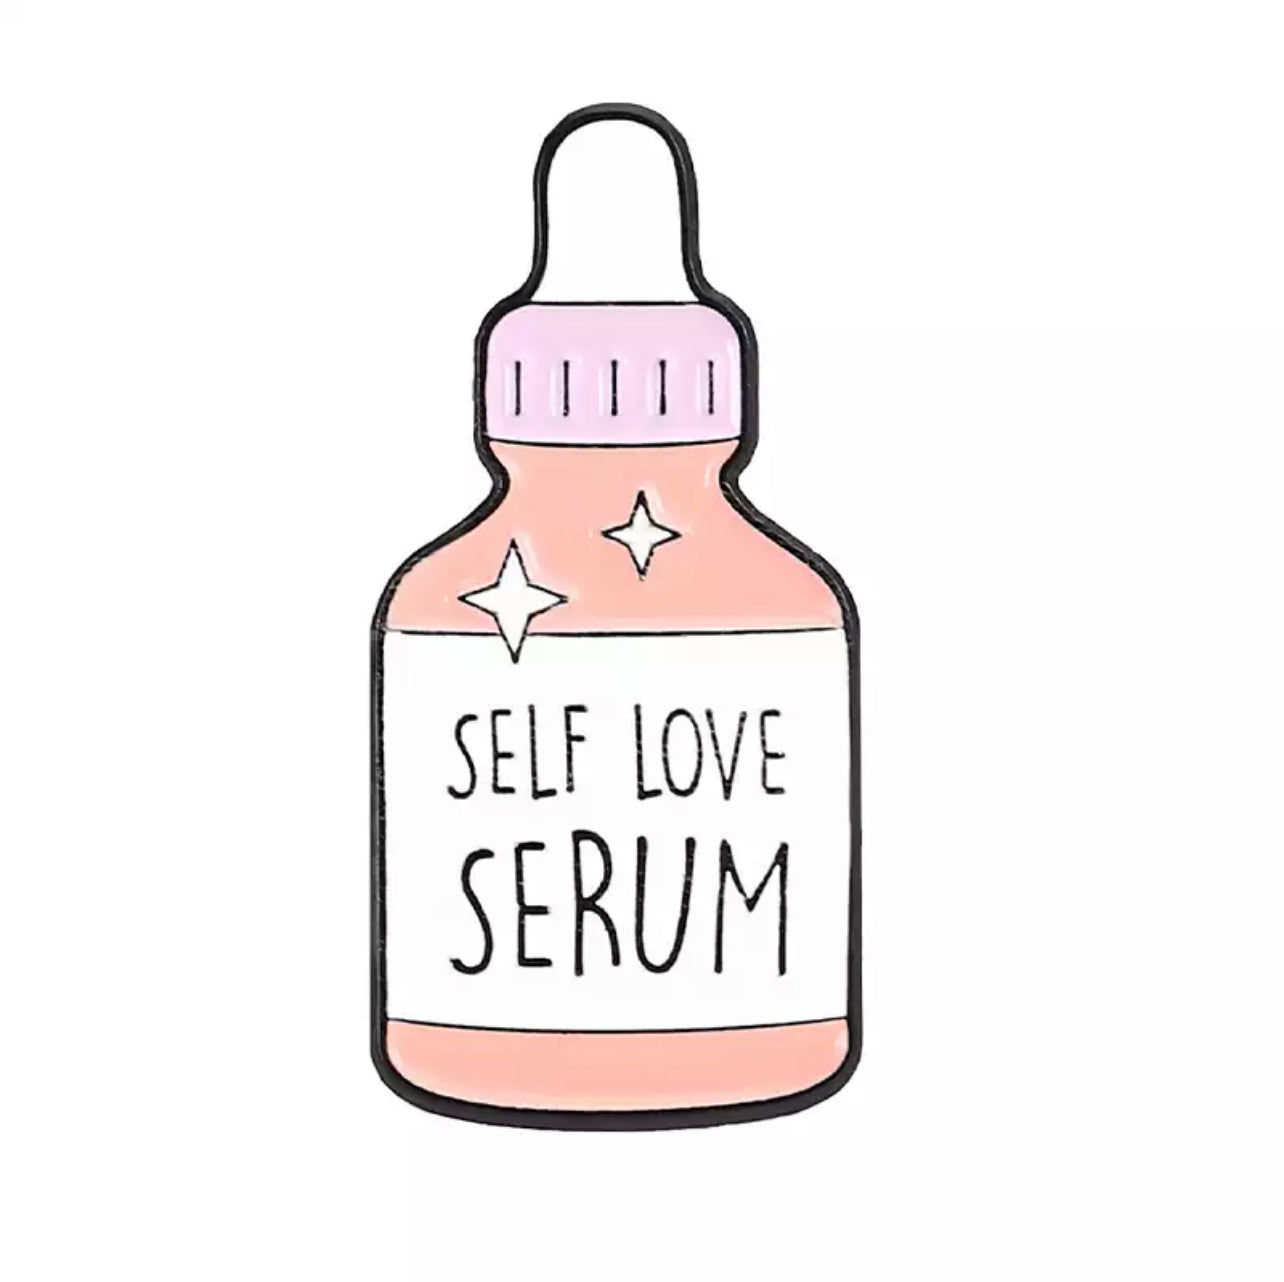 Self love serum